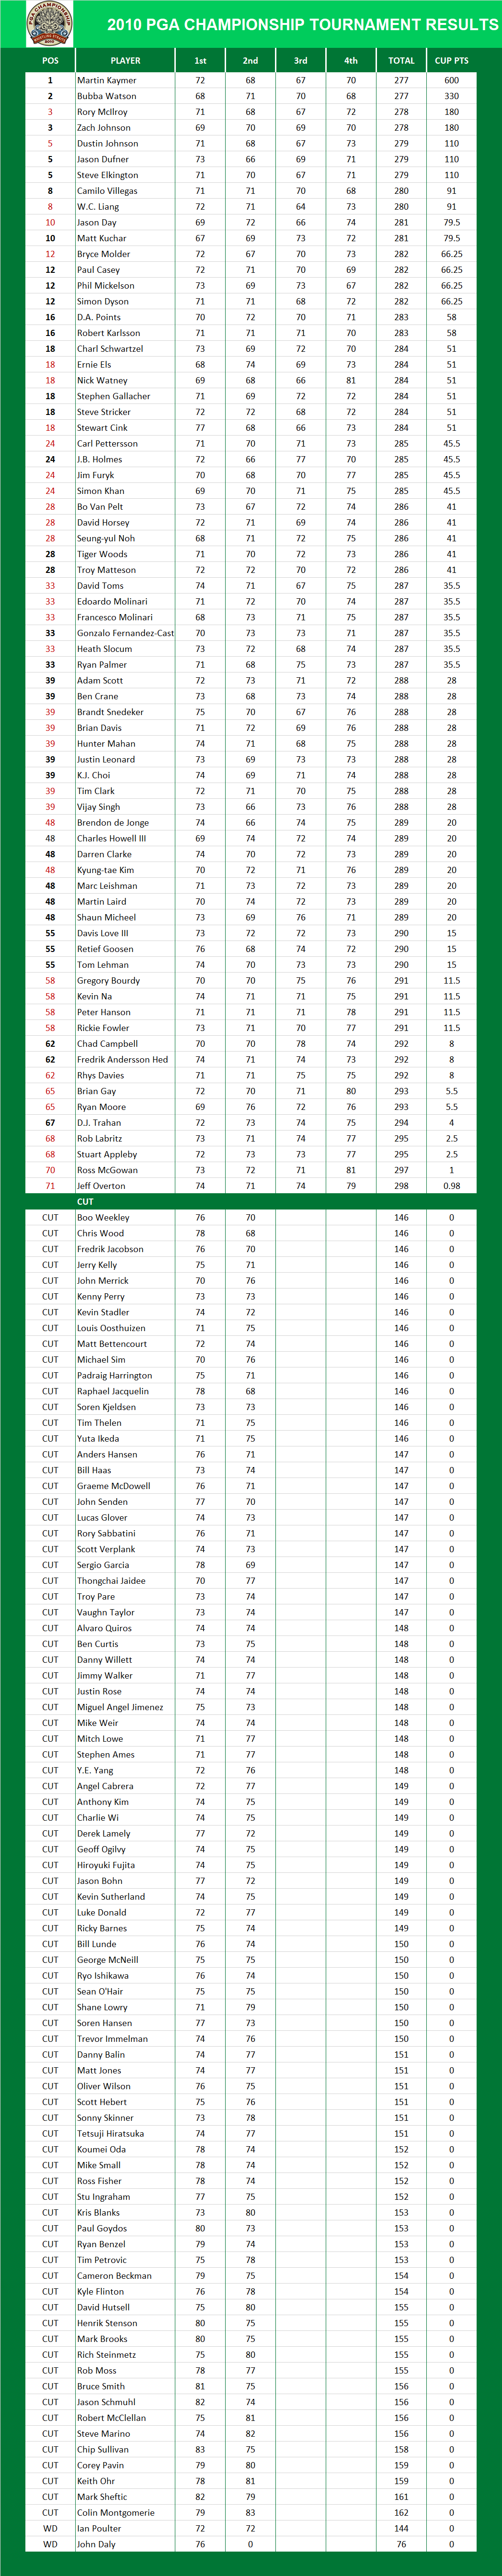 2010 PGA Championship Results